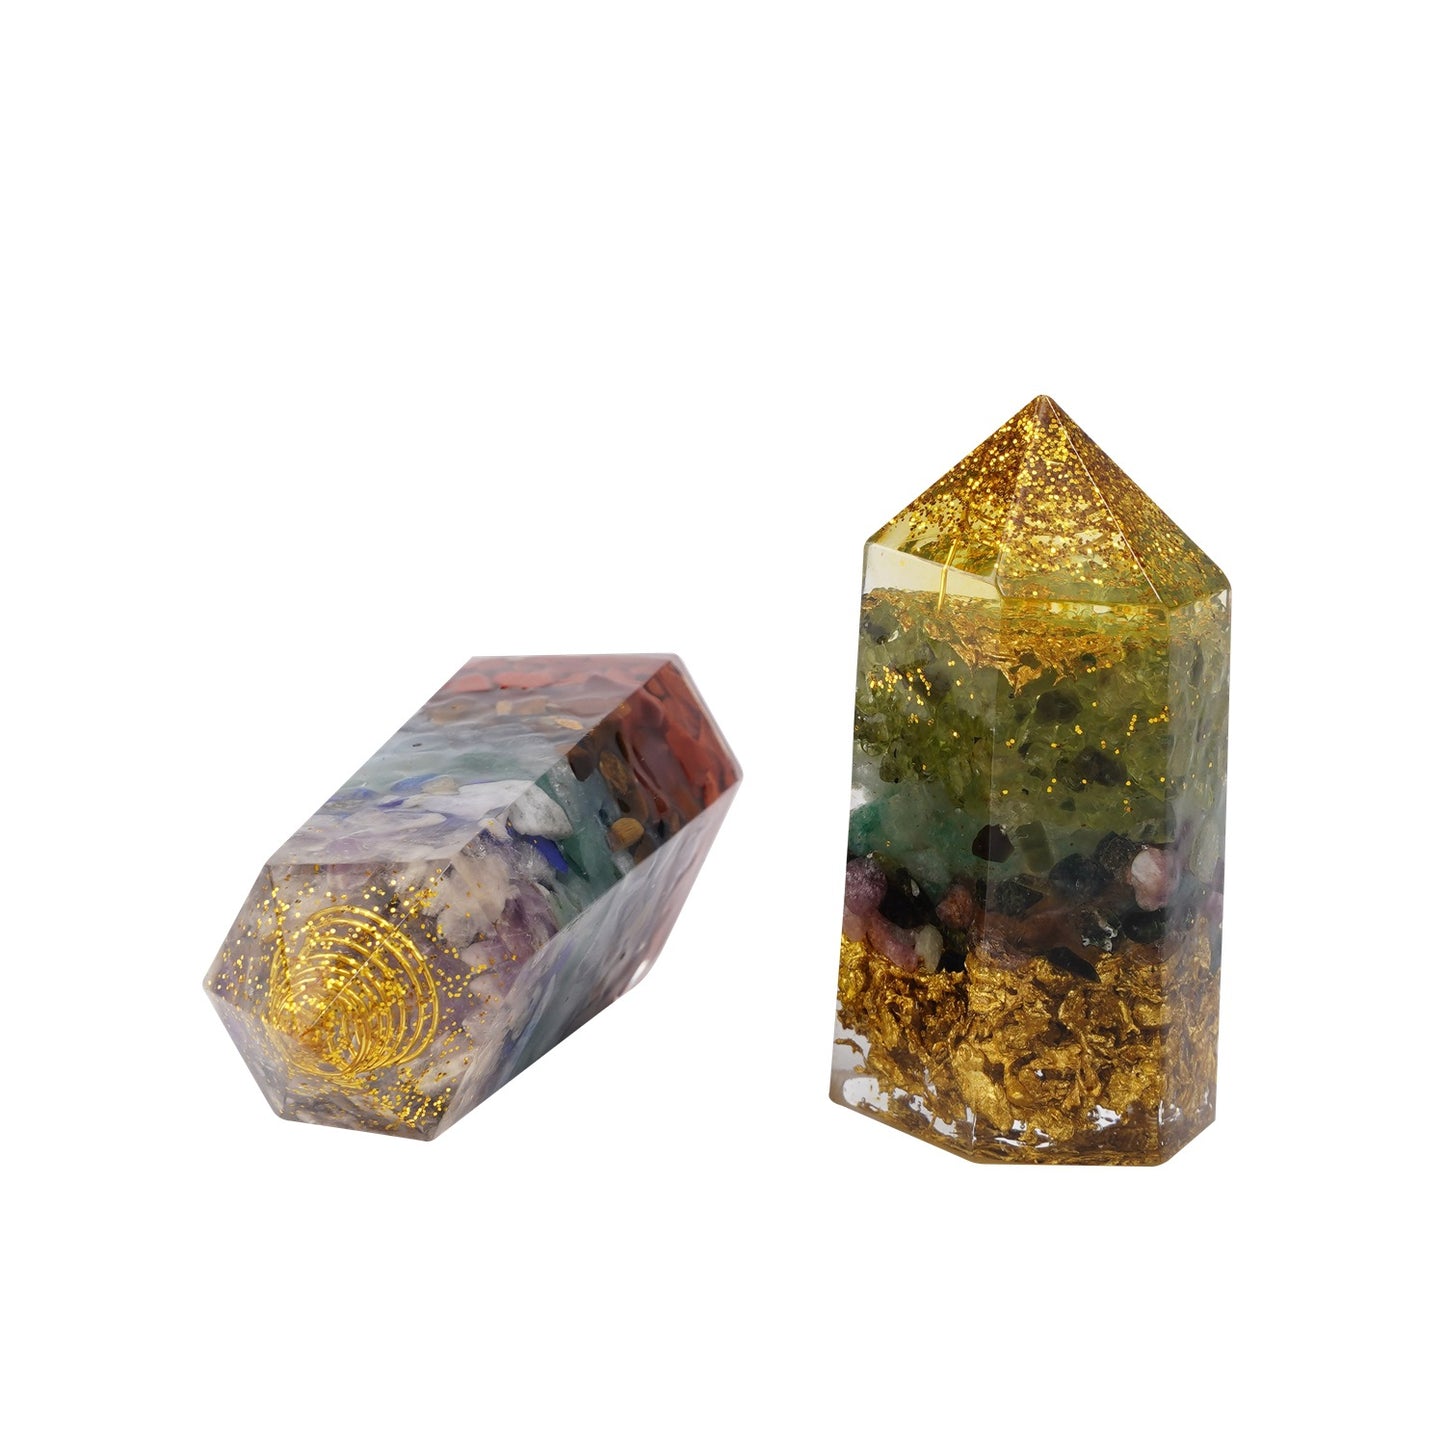 Adorno epoxi con piedra natural en bruto - Fragmentos de cristal